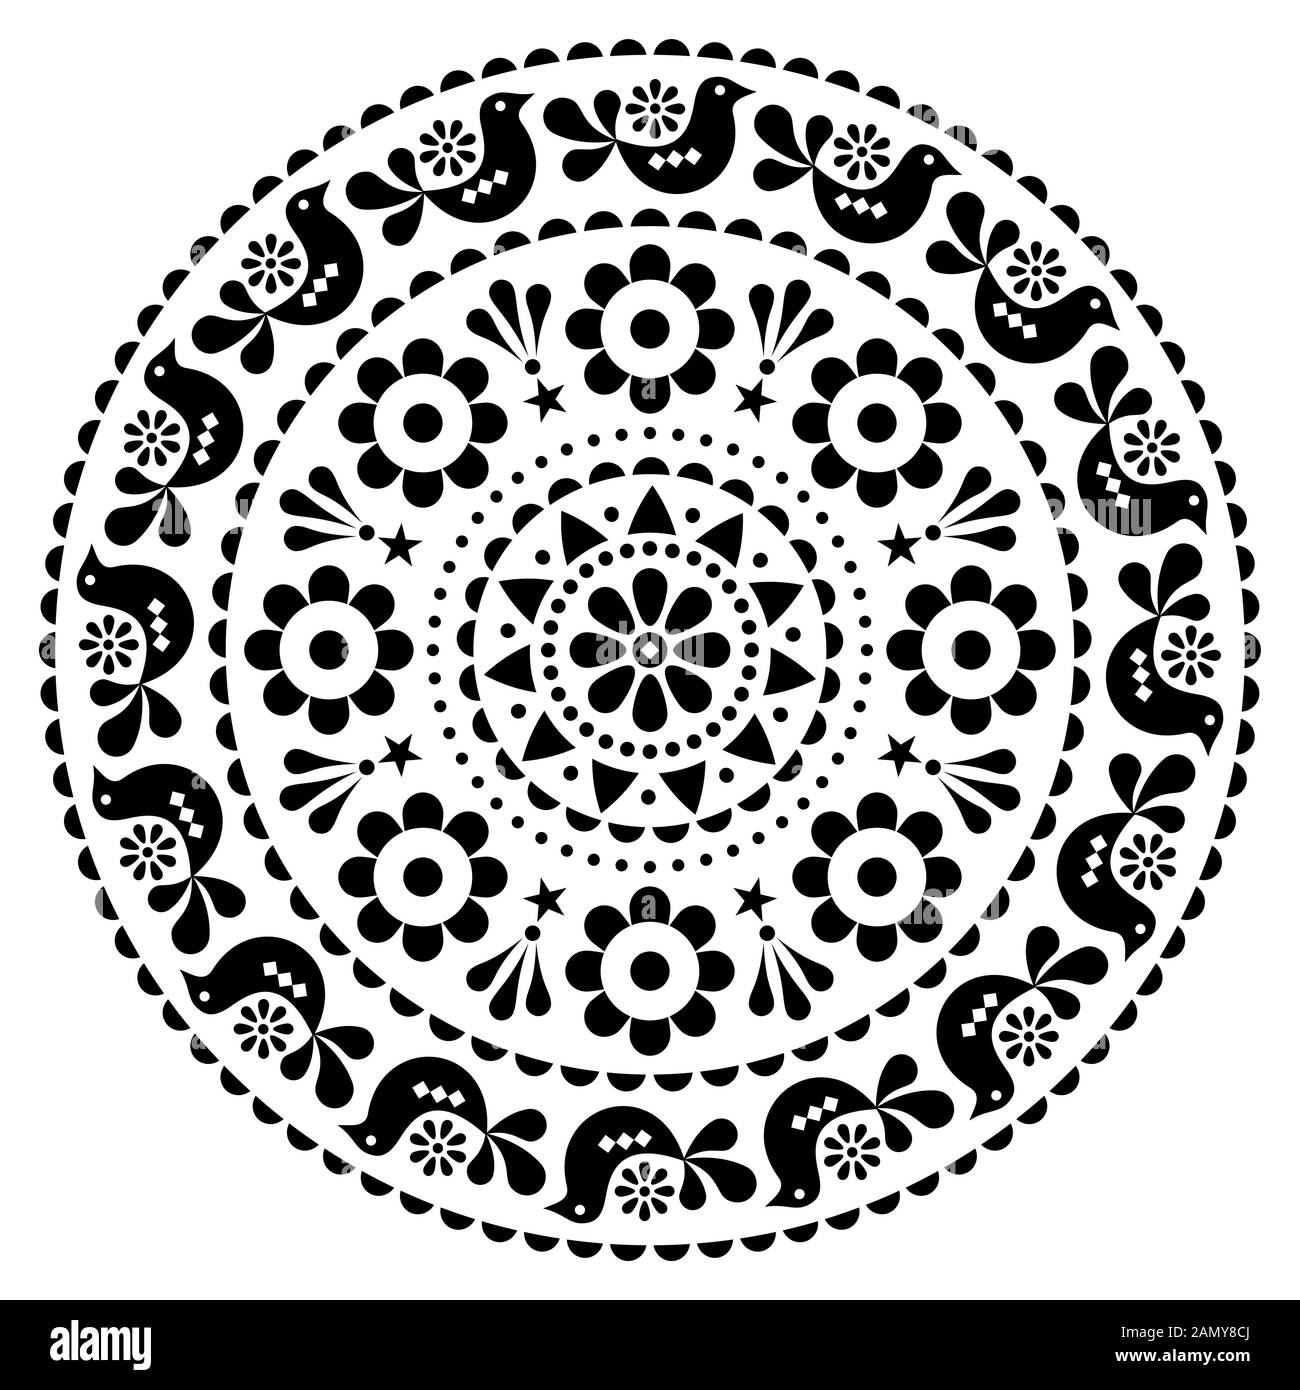 Scandinavian folk vector design mandala pattern - round design, cute floral ornament with birds in black on white background Stock Vector